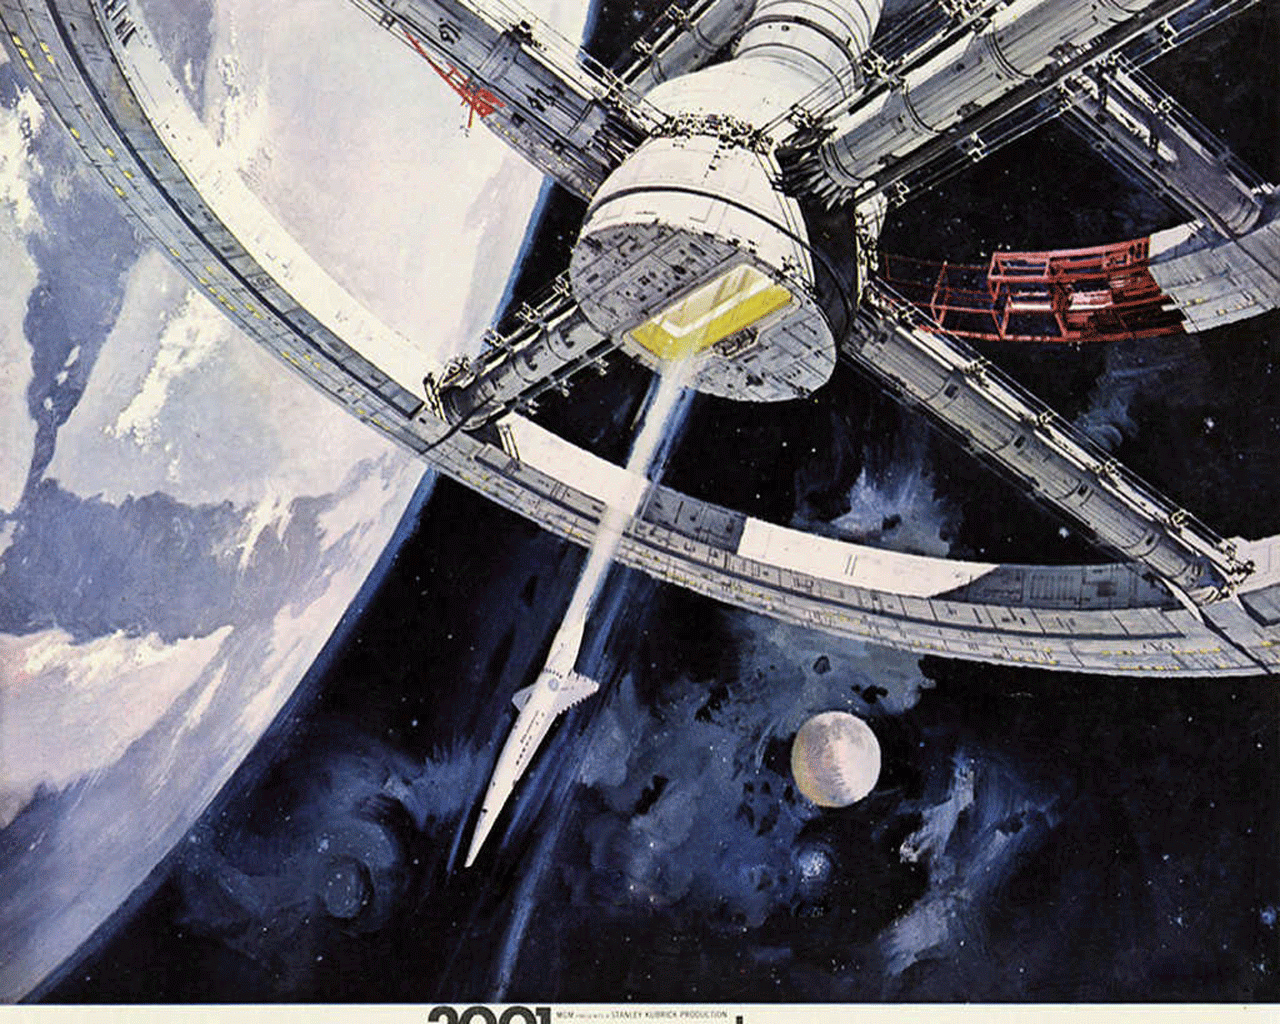 2001 a space odyssey